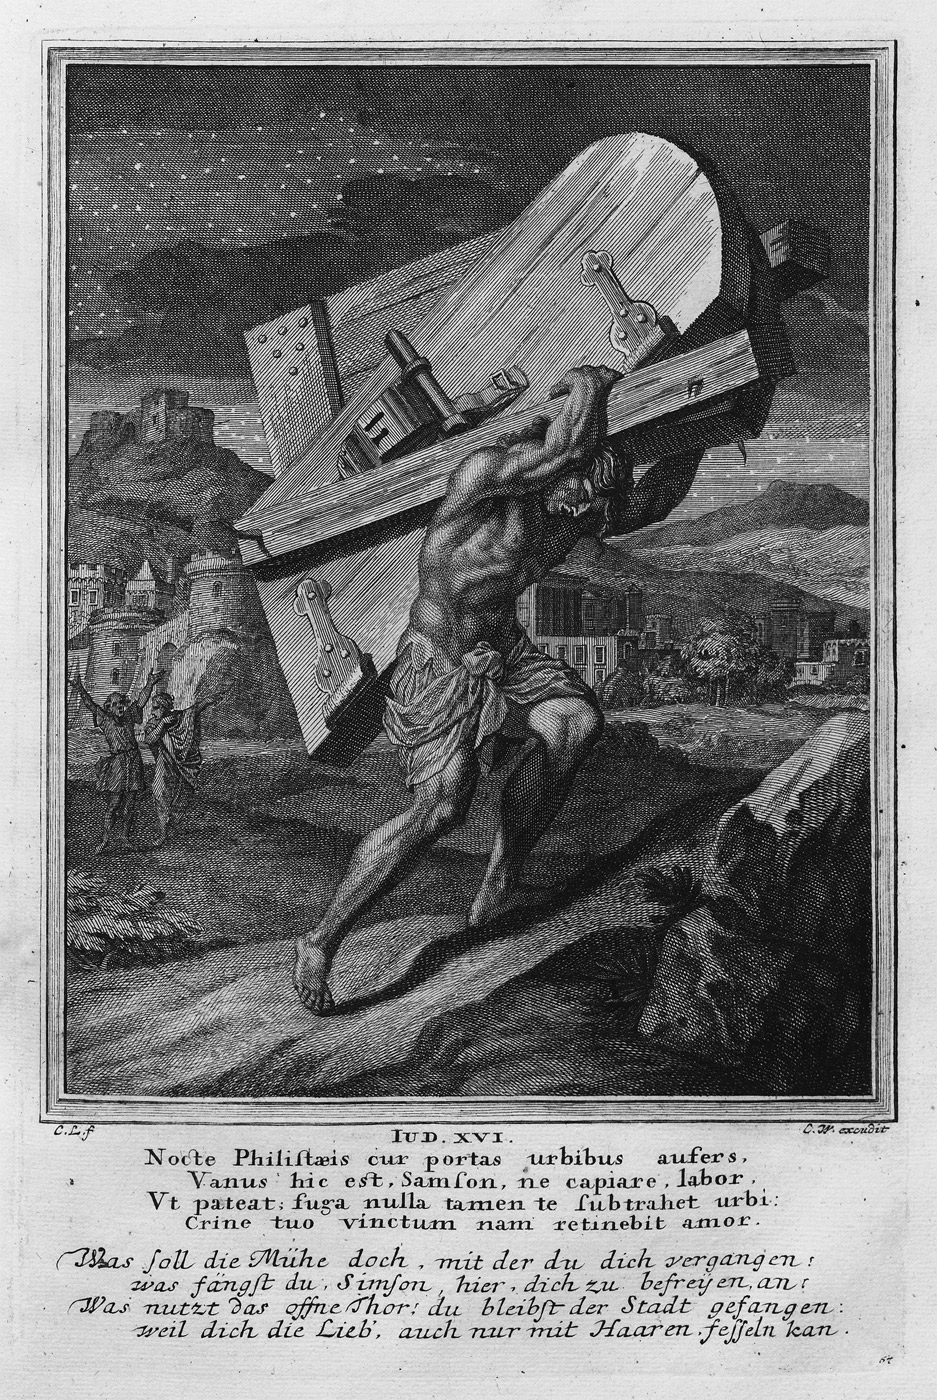 Lot 1244, Auction  115, Weigel, Christoph, Historiae celebriores Veteris Testamenti 